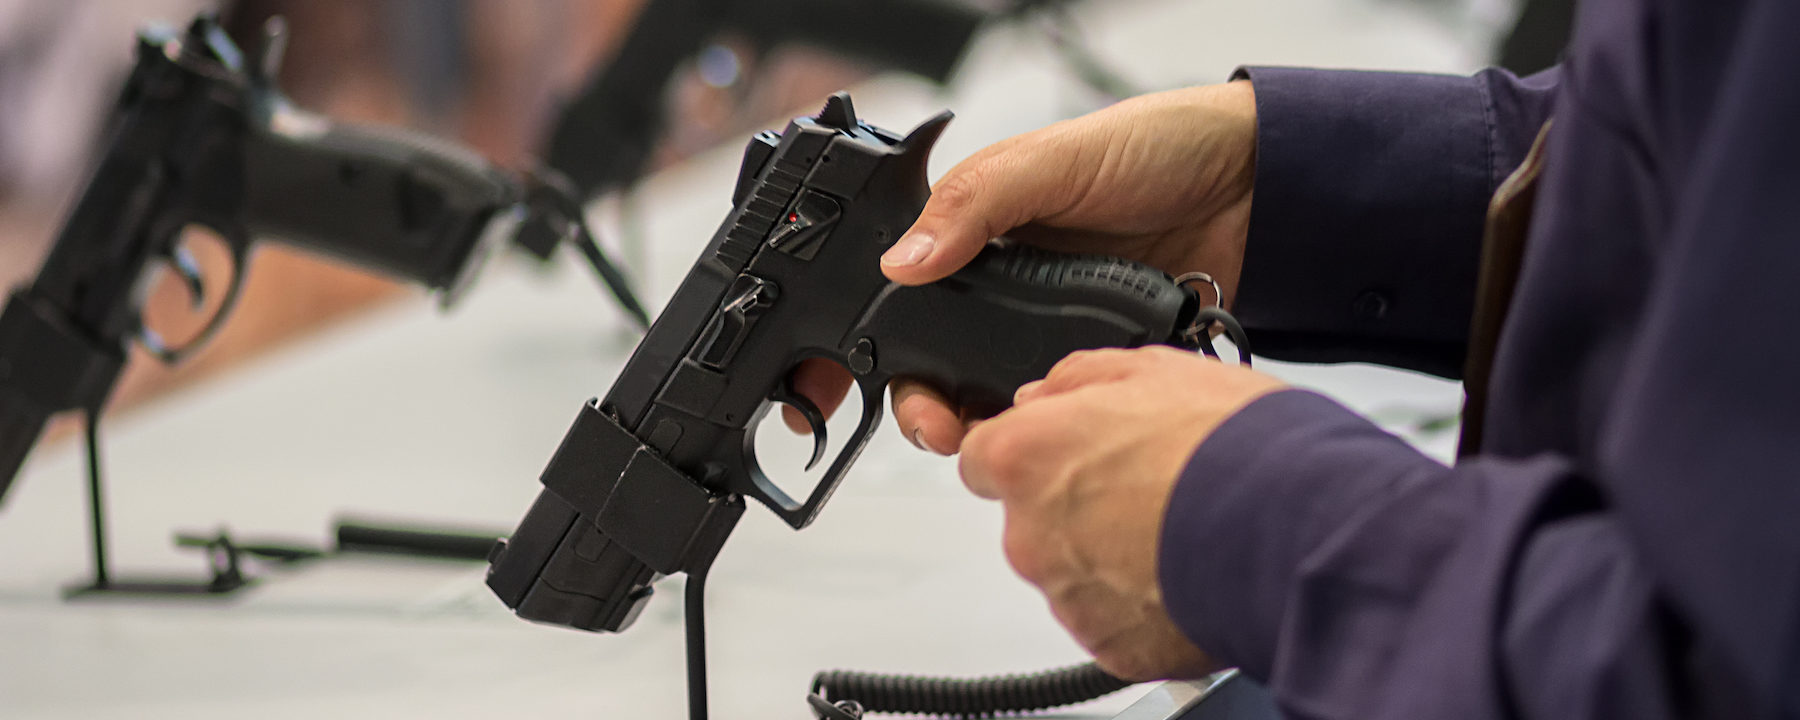 Virginia Sheriff to Deputize Citizens in Response to Proposed Gun Control